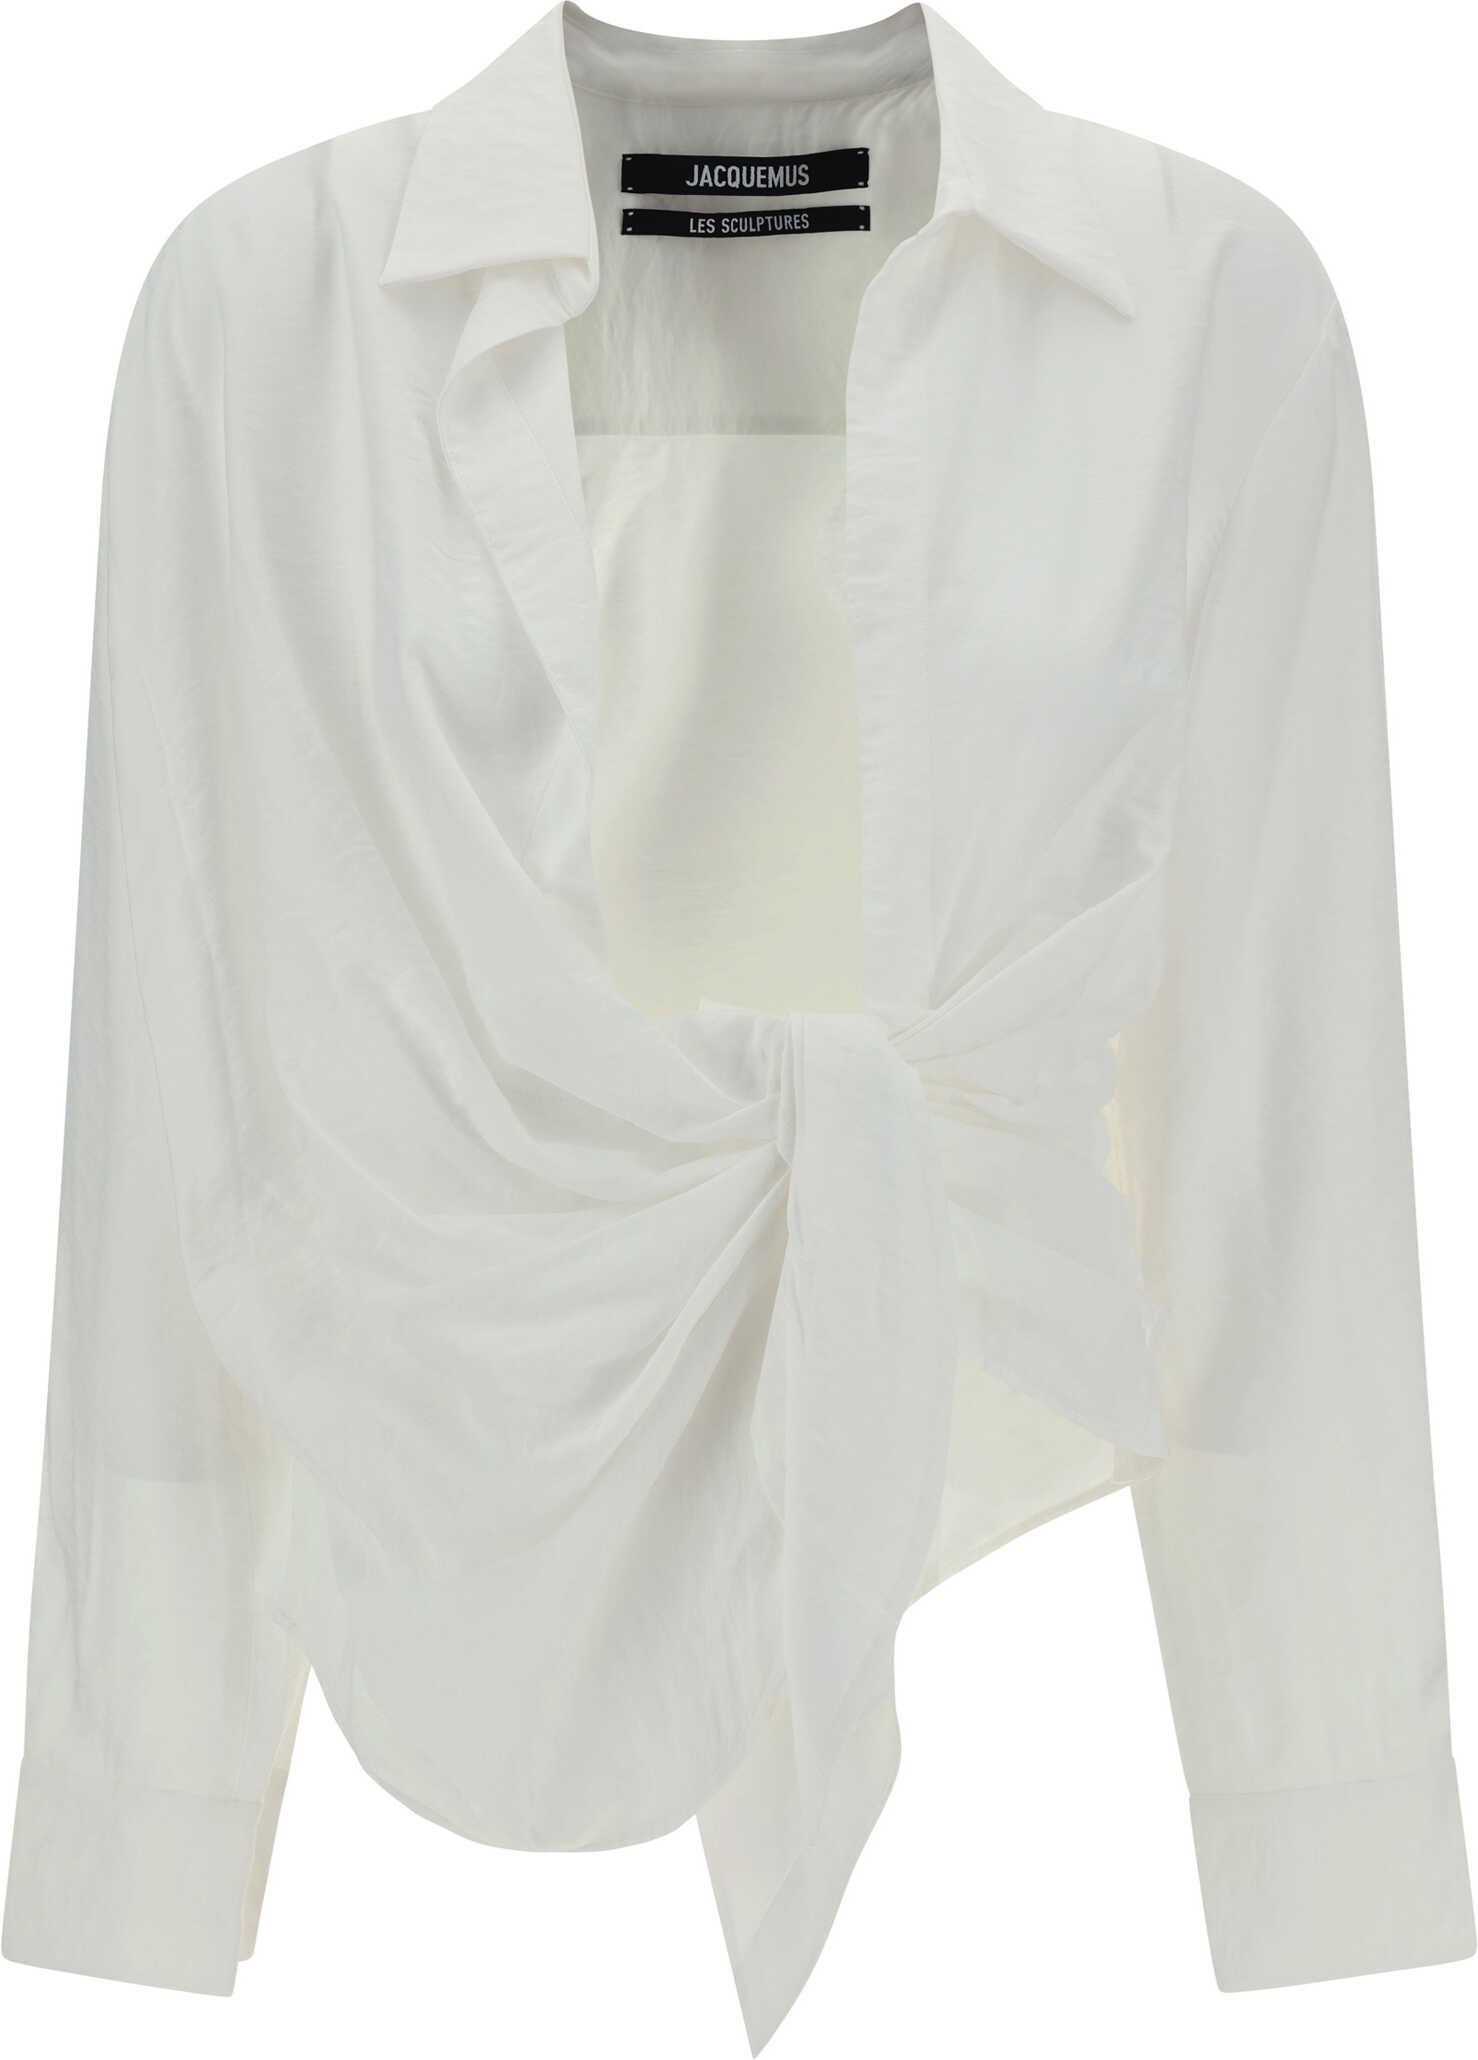 JACQUEMUS La Chemise Bahia Shirt WHITE